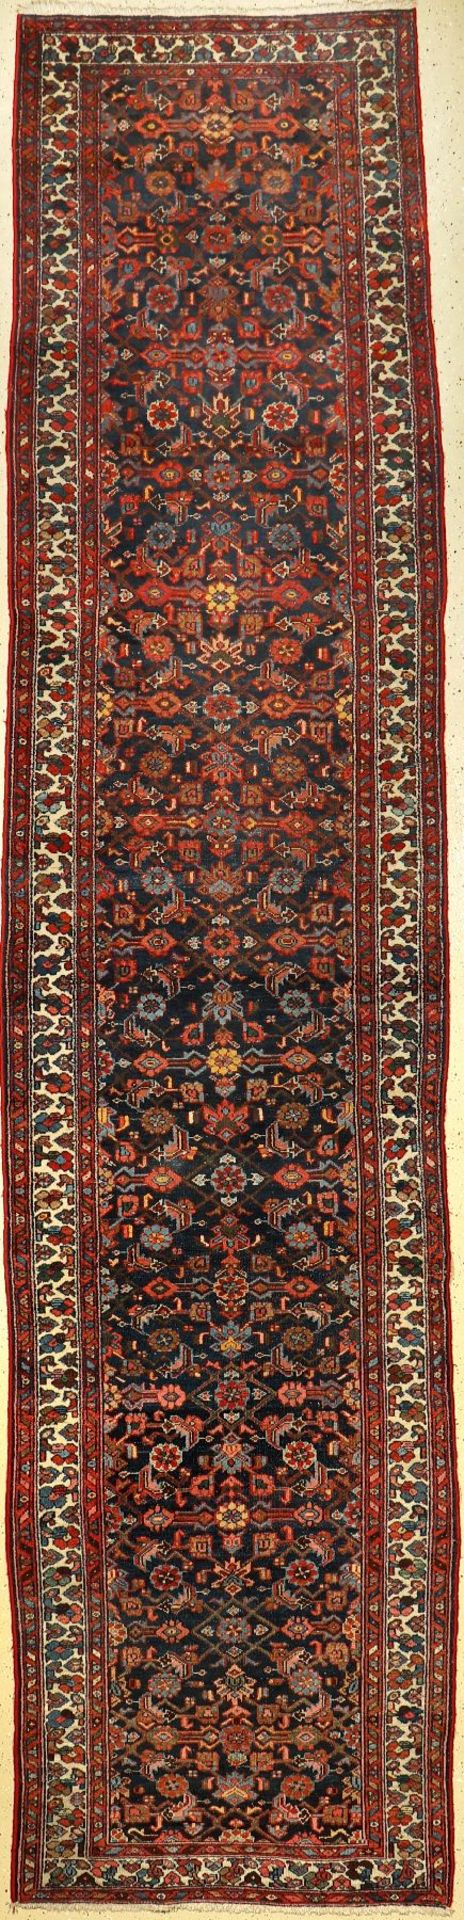 Hamadan, Persien, um 1940, Wolle auf Baumwolle, ca. 443 x 105 cm, EHZ: 3Hamadan, Persia, around